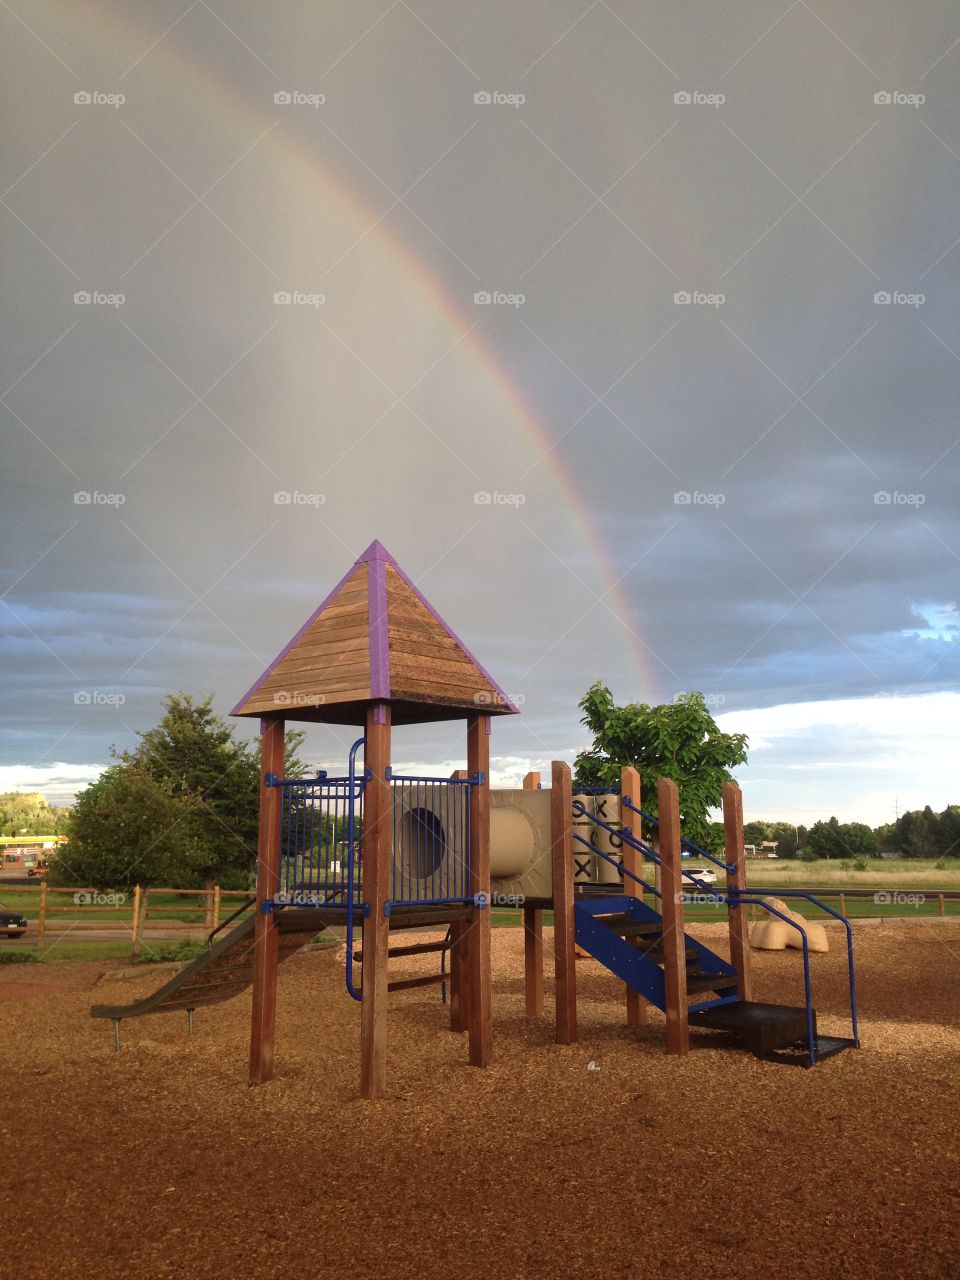 Rainbow over the playground